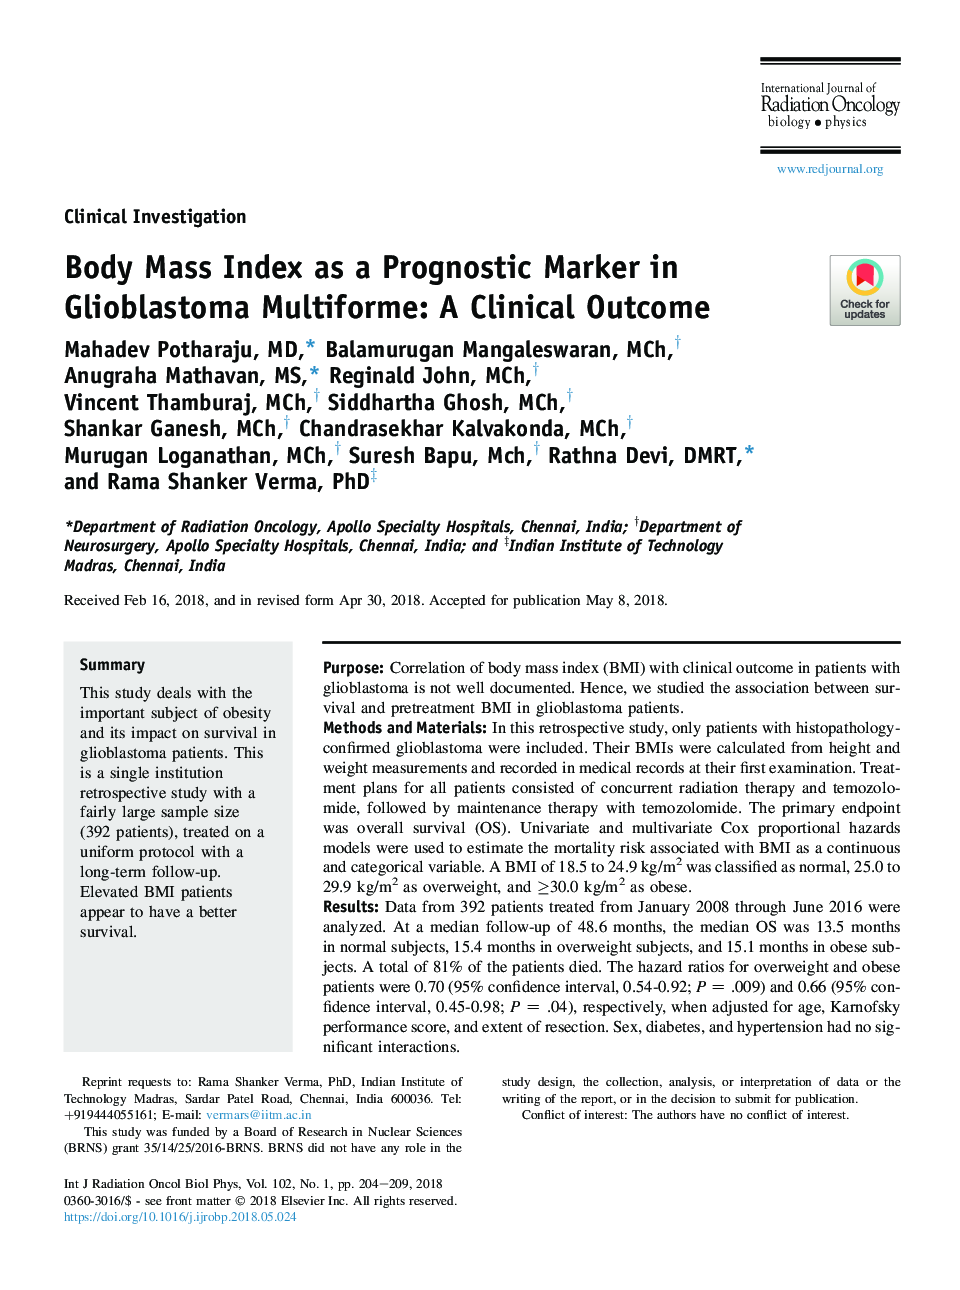 Body Mass Index as a Prognostic Marker in Glioblastoma Multiforme: A Clinical Outcome